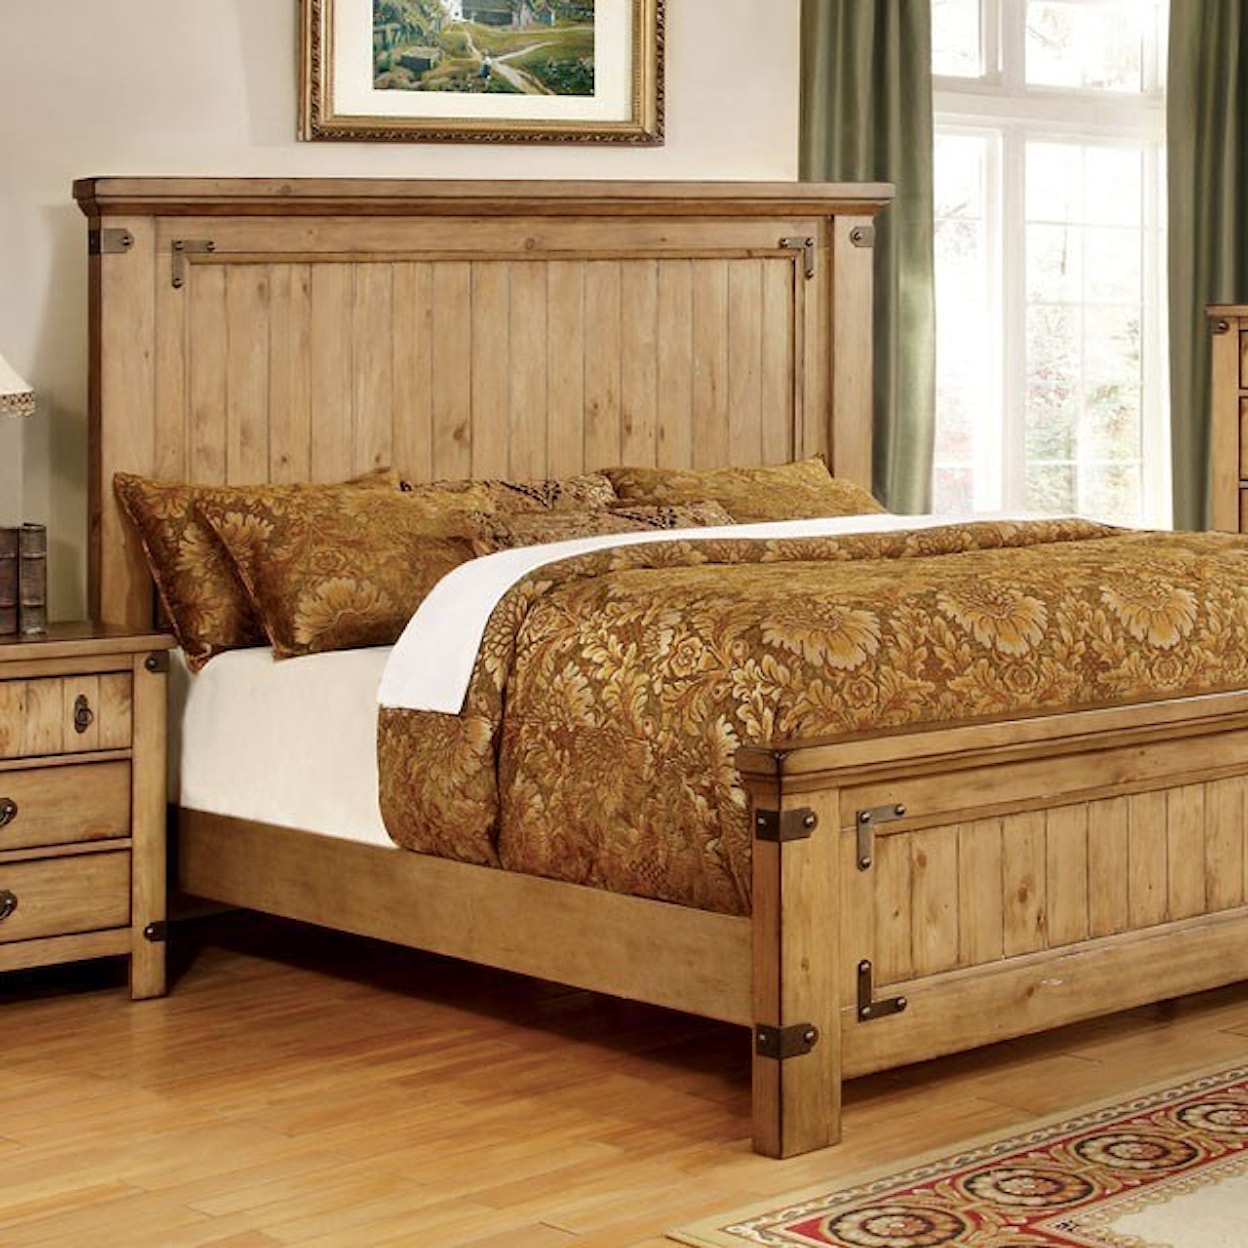 Furniture of America Pioneer California King Bed